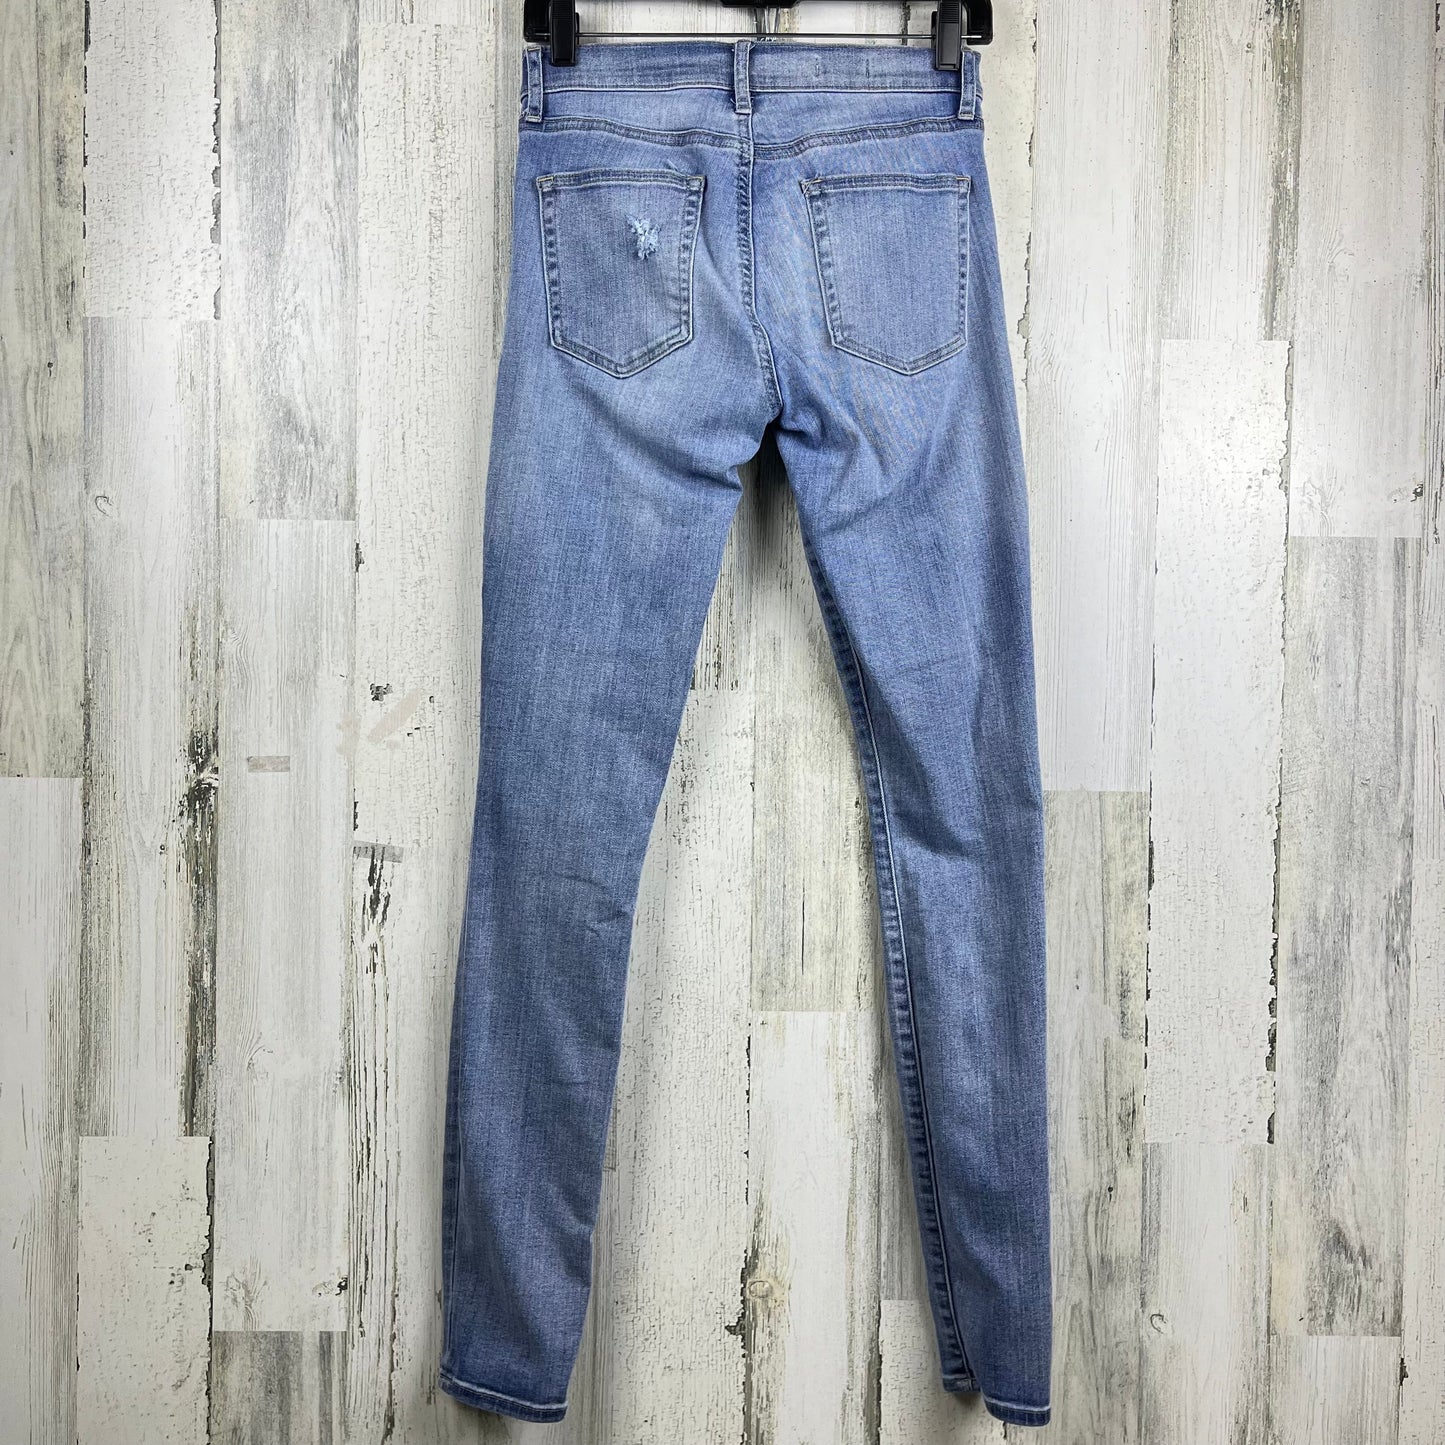 Jeans Skinny By Gap  Size: 4